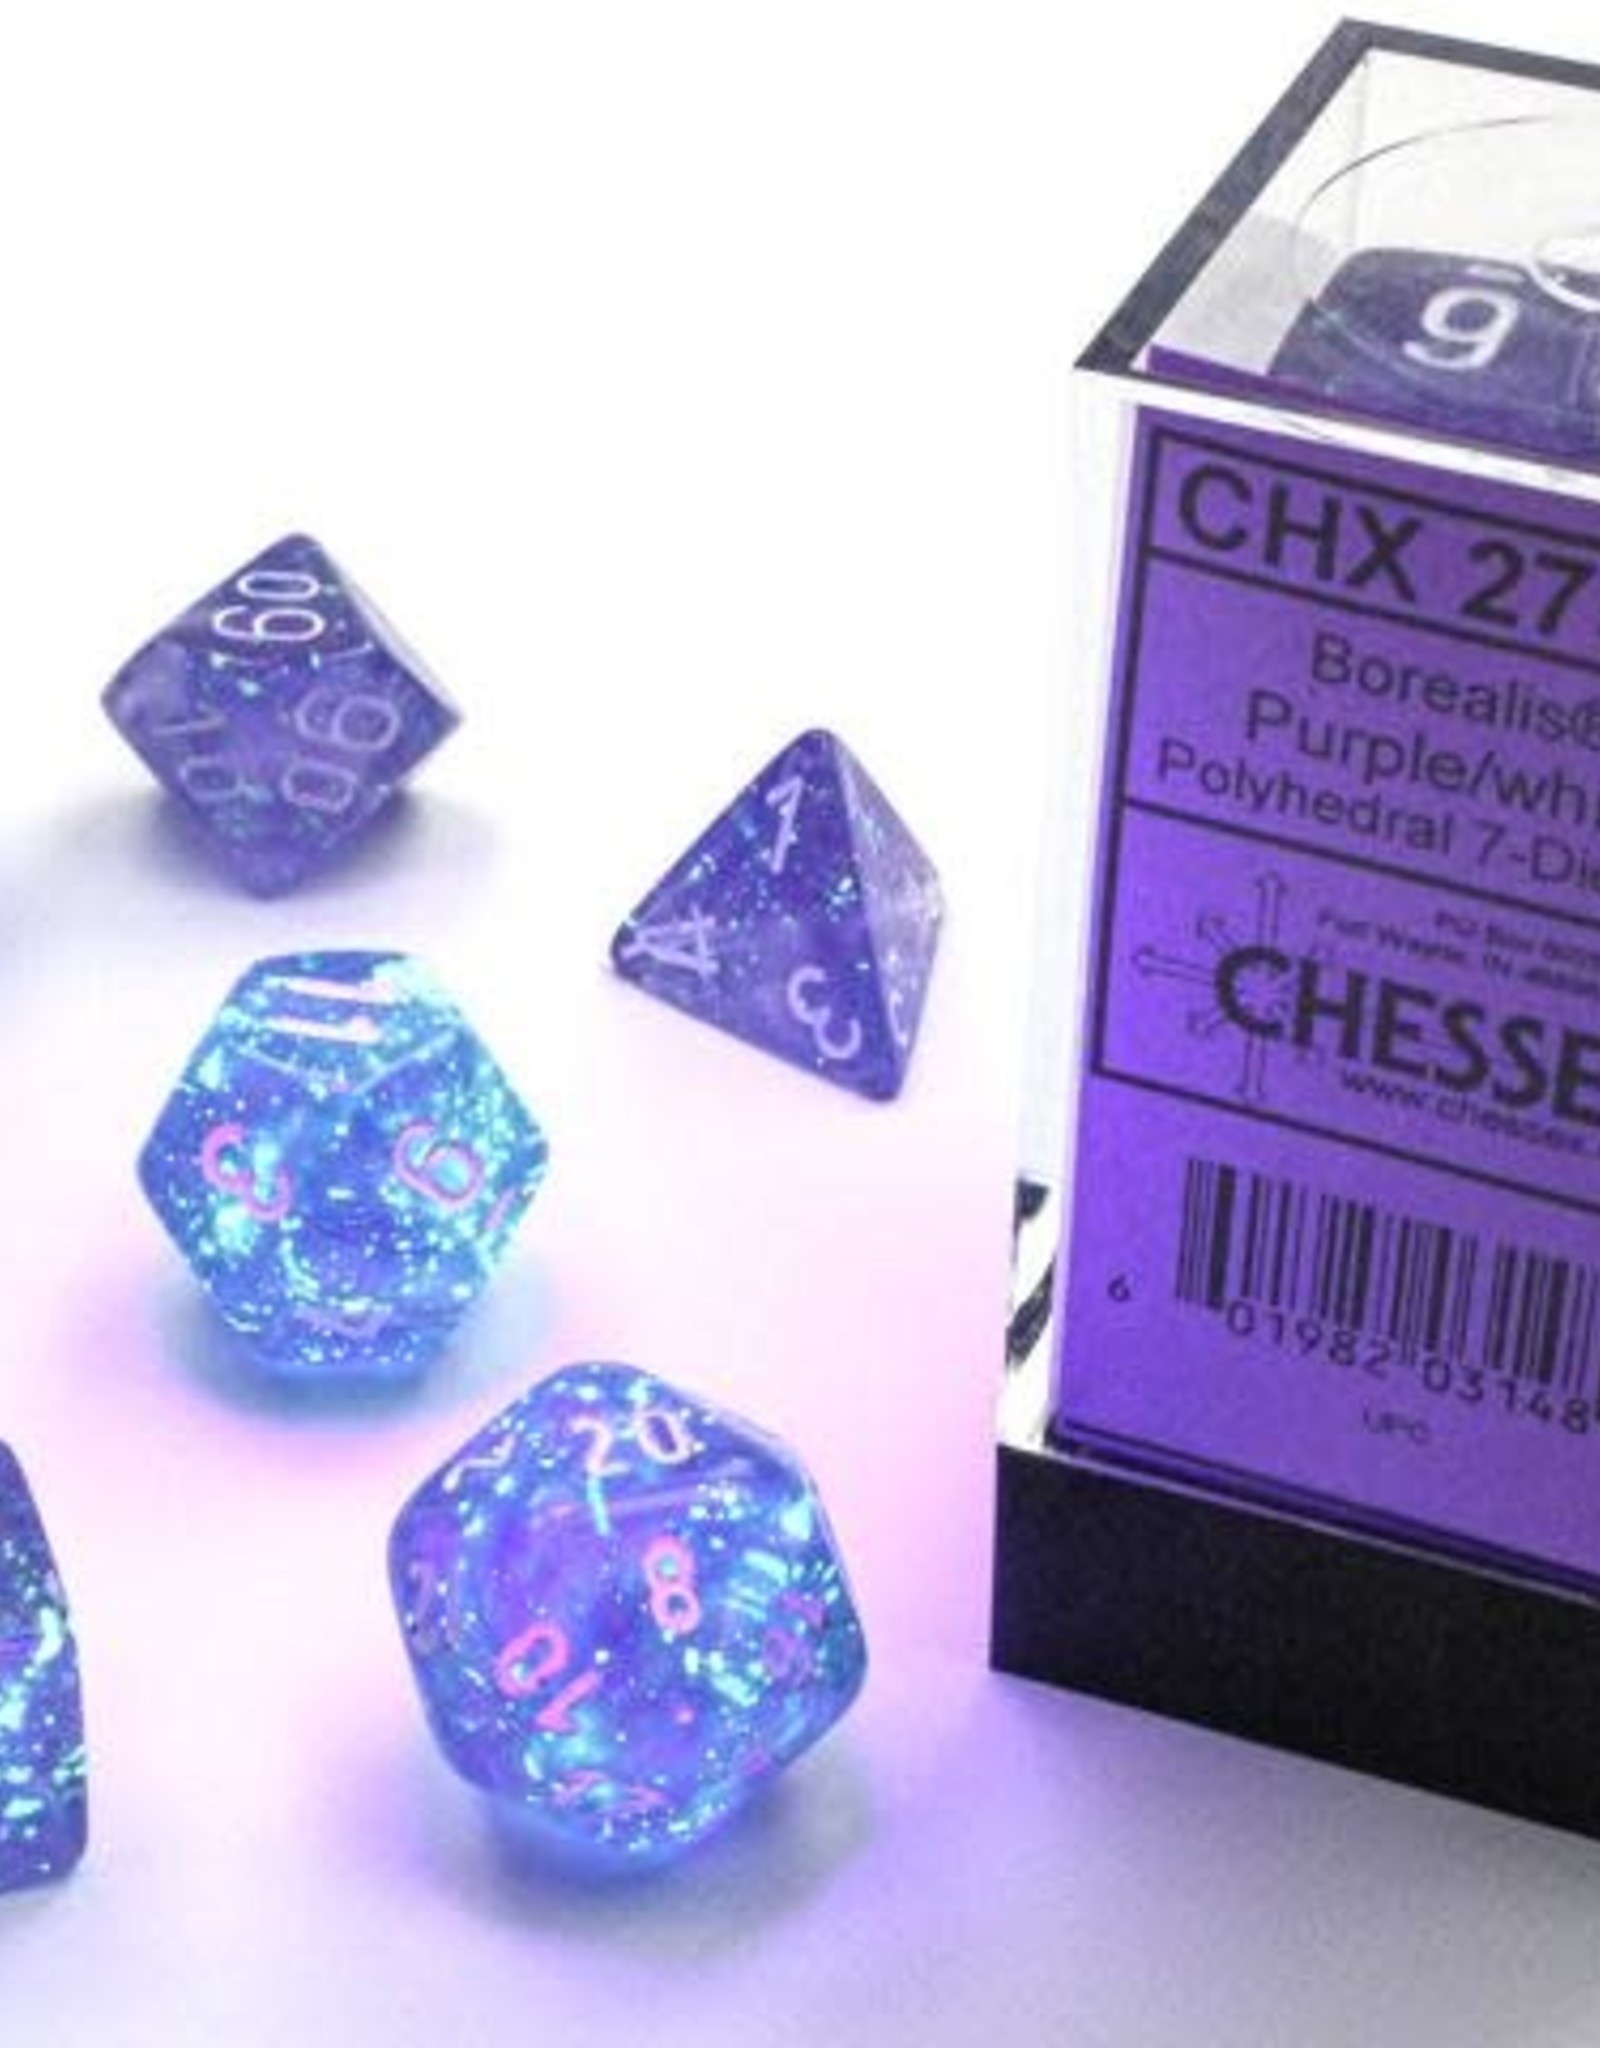 Chessex CHX Borealis Dice: Luminary Purple/White Poly 7-Die Set 27577